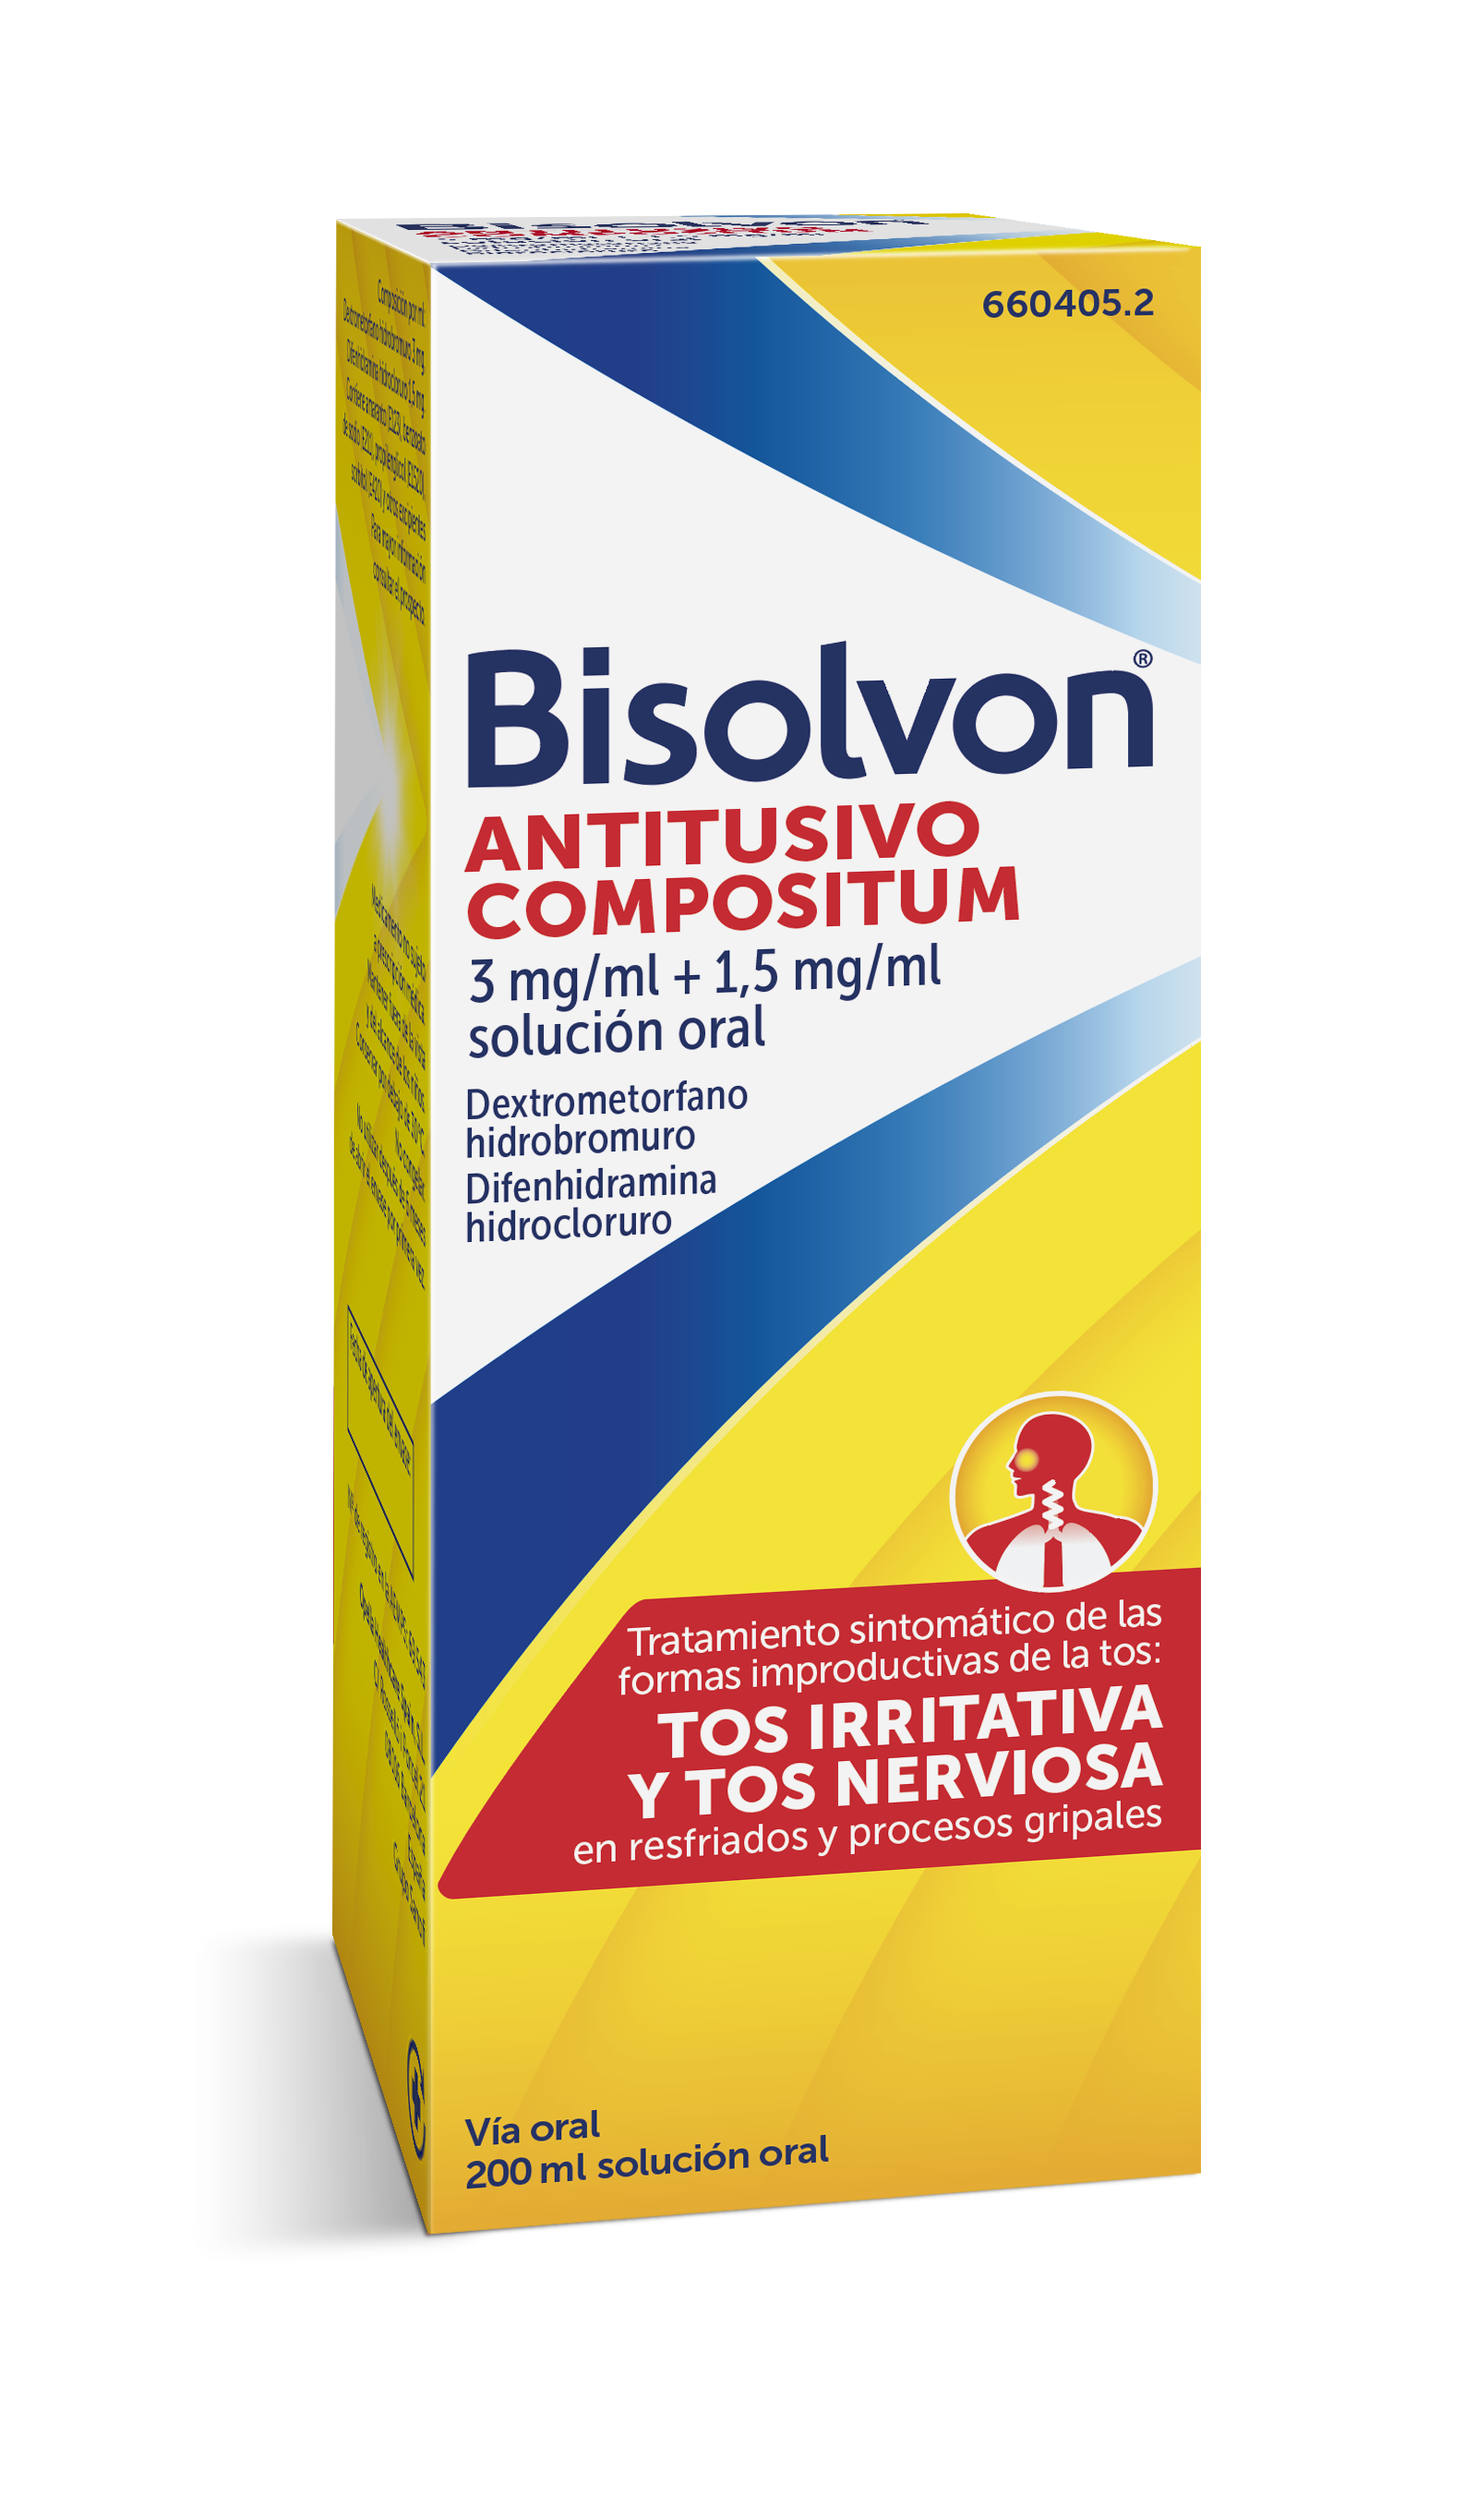 Bisolvon Antitusivo Compositum 3 mg/ml +1,5 mg/ ml solución oral, 200 ml